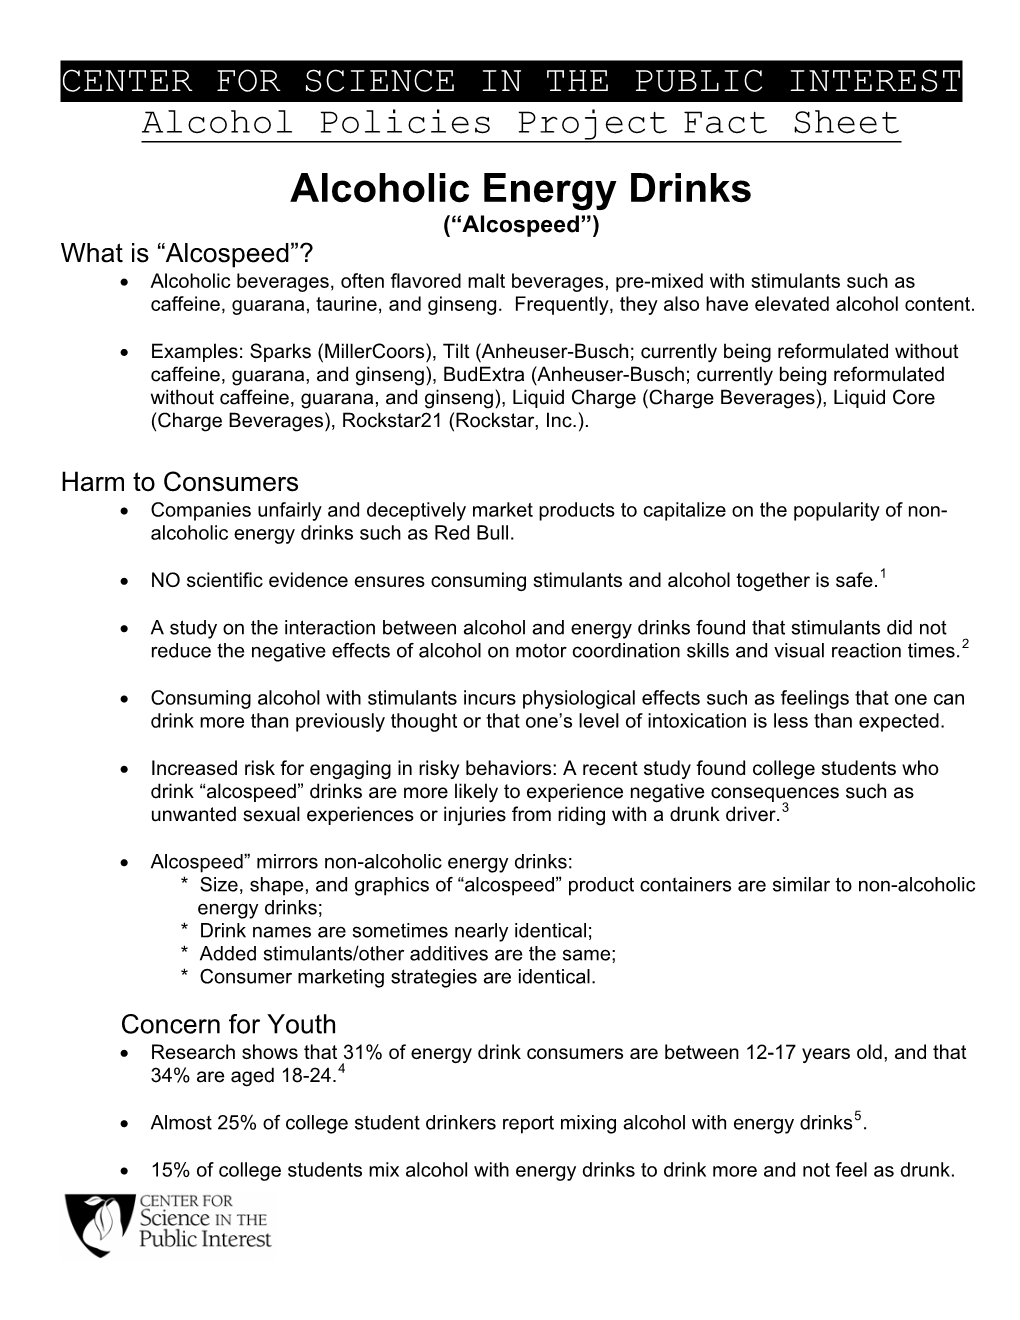 Alcoholic Energy Drinks